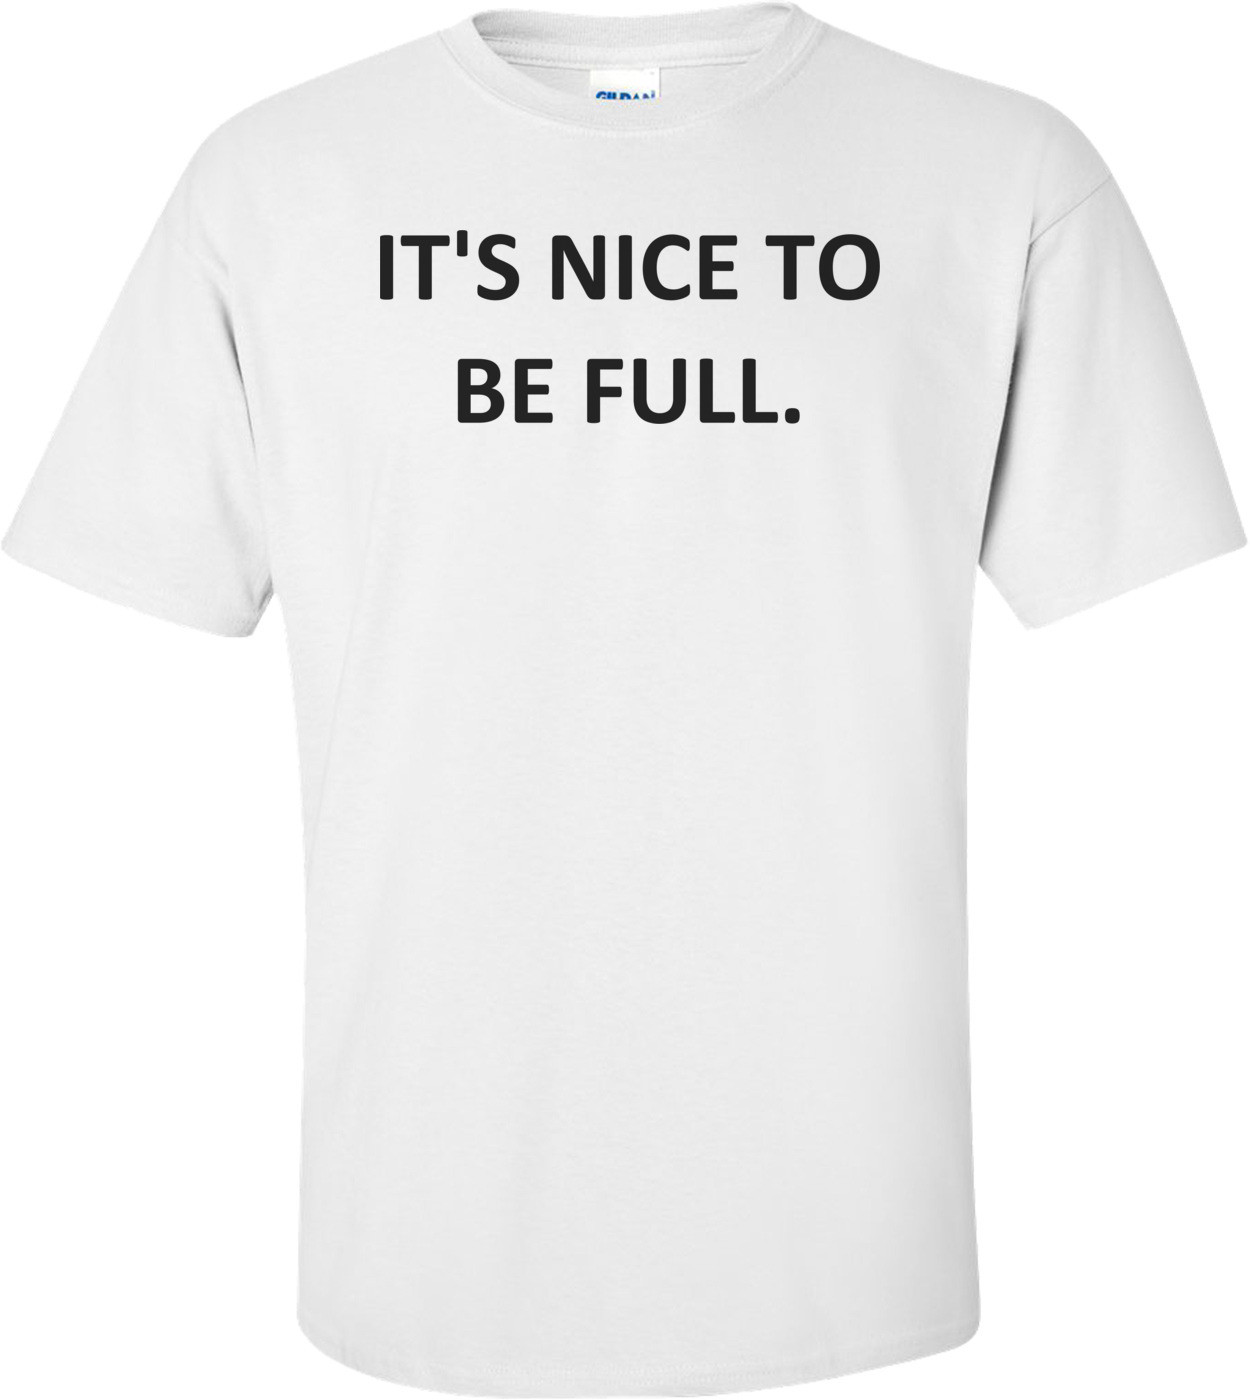 IT'S NICE TO BE FULL. Shirt